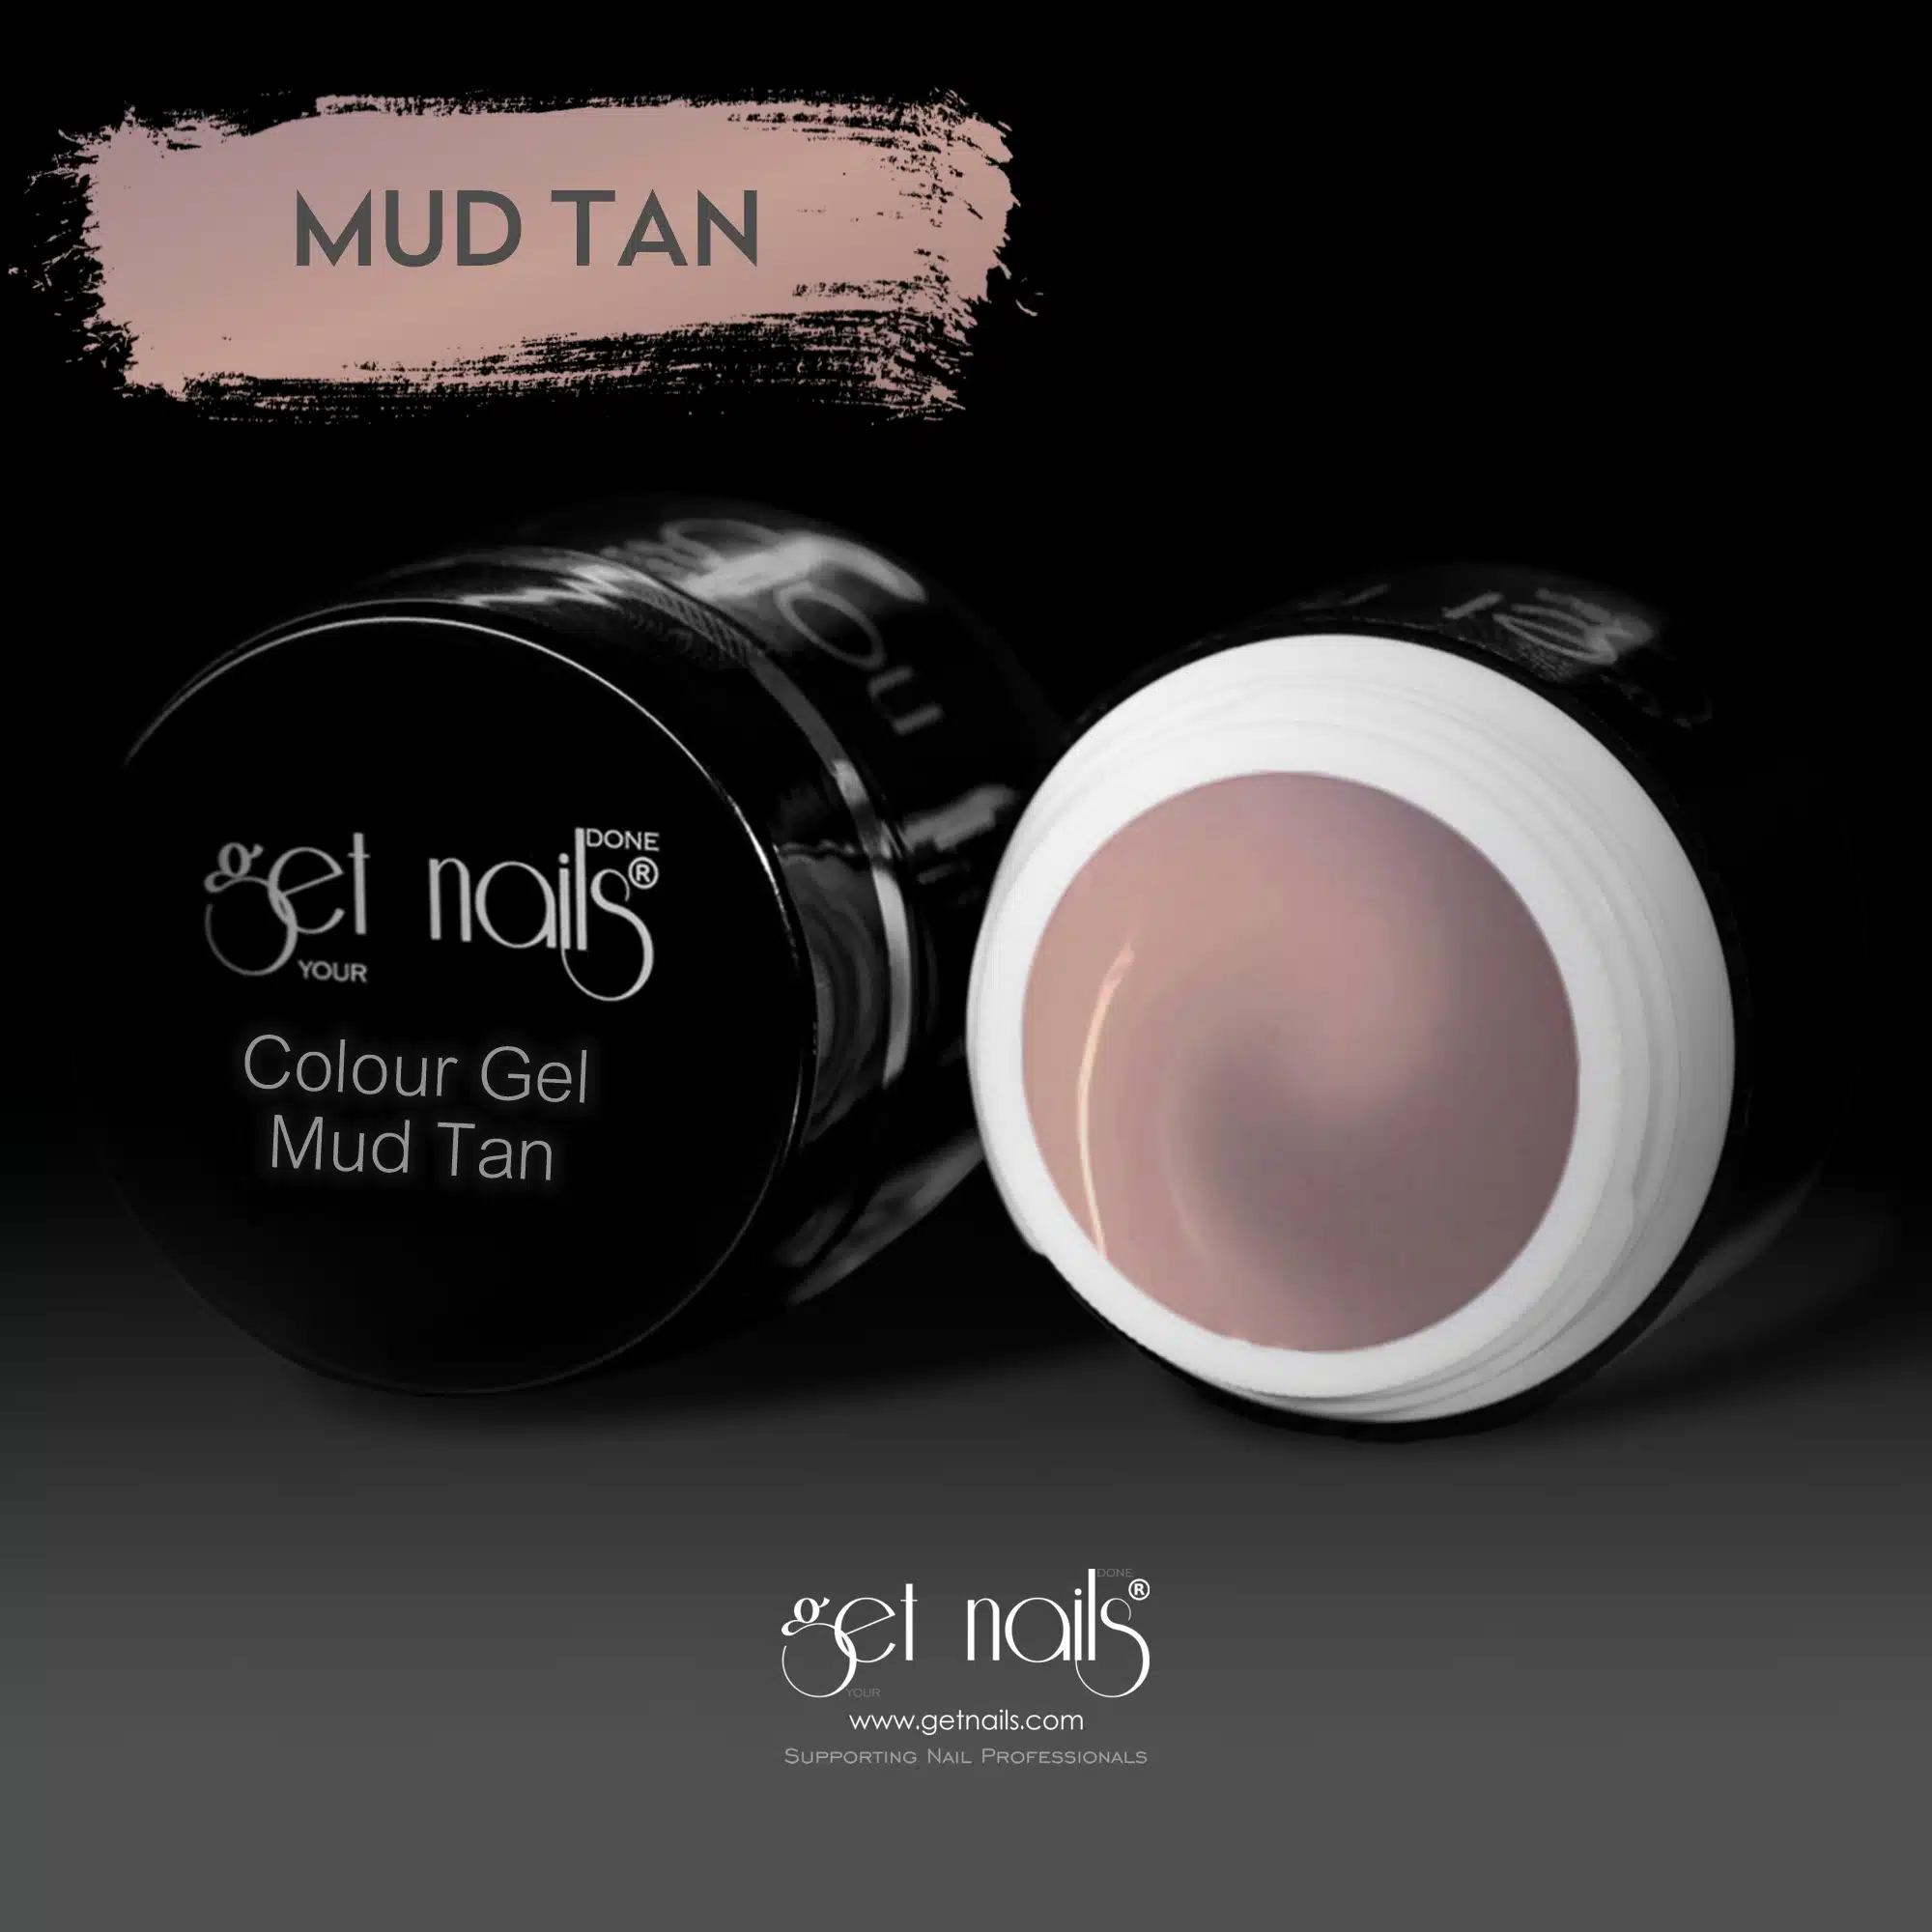 Get Nails Austria - Color Gel Mud Tan 5g